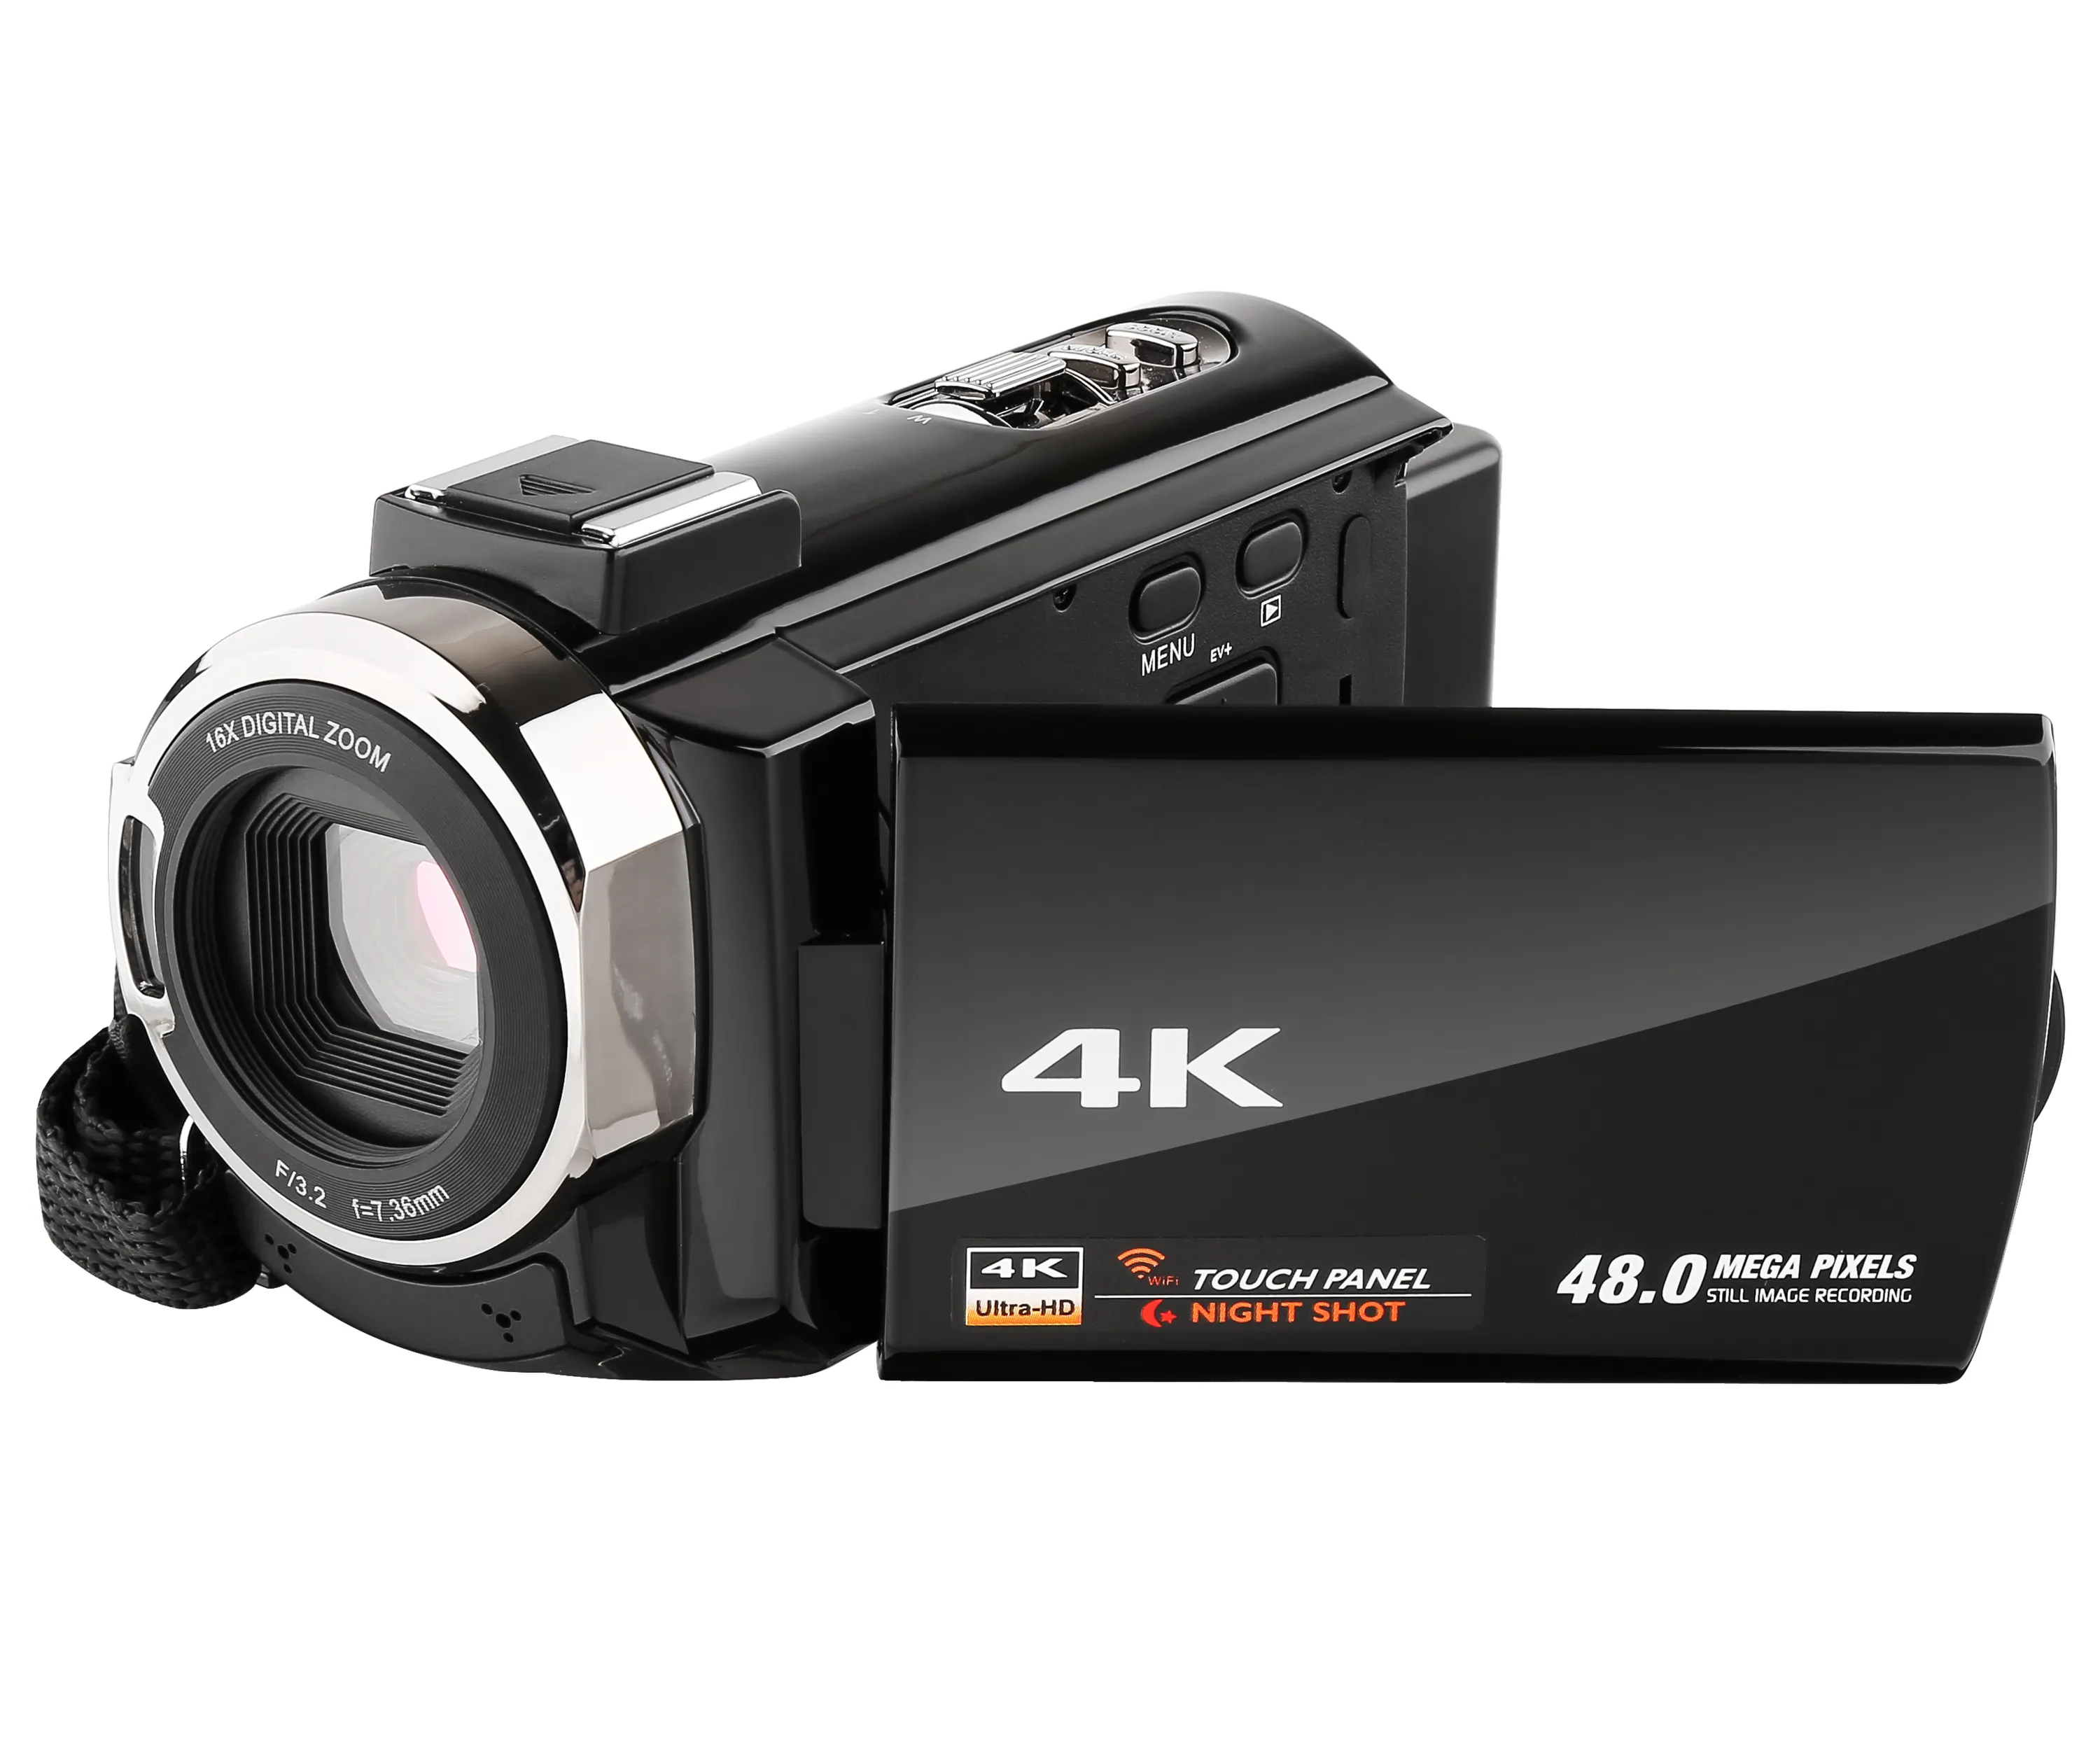 Professional Video Camera 4K Ultra HD Digital WiFi Camera 48.0MP 3.0 zoll Touch Screen Night Vision 16X Digital ZOOM